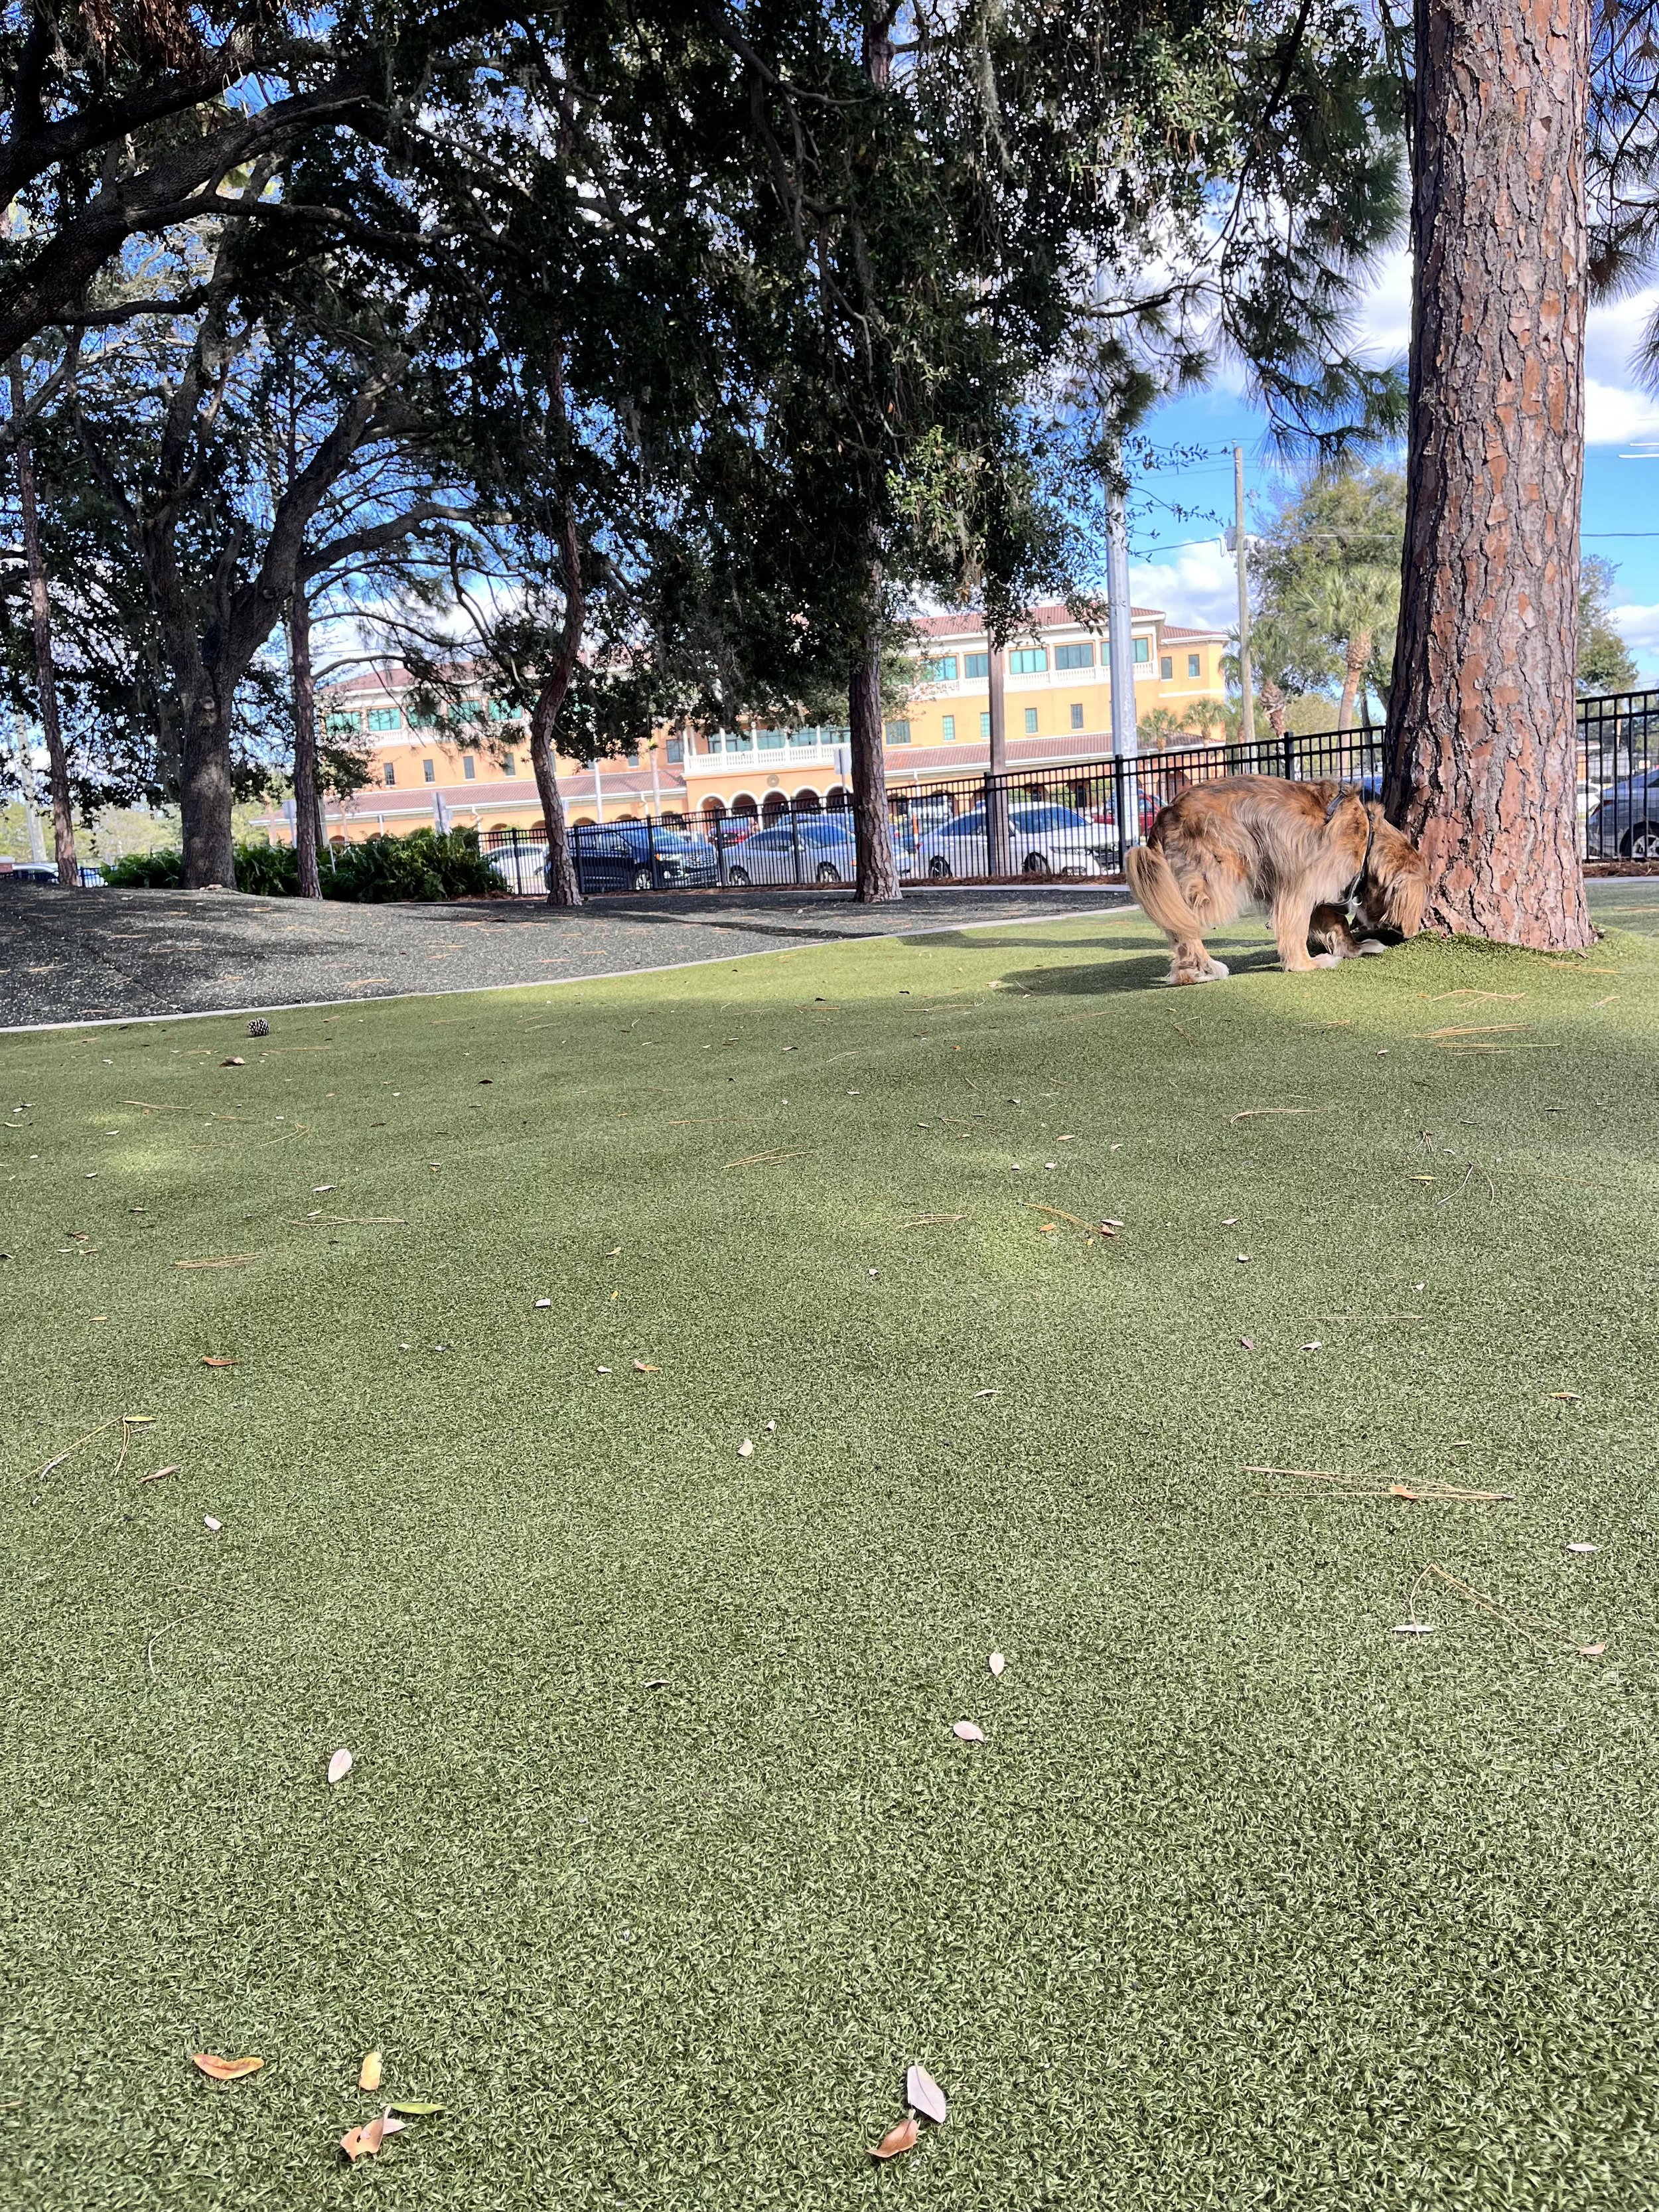 Tampa riverwalk dog park Florida.jpg